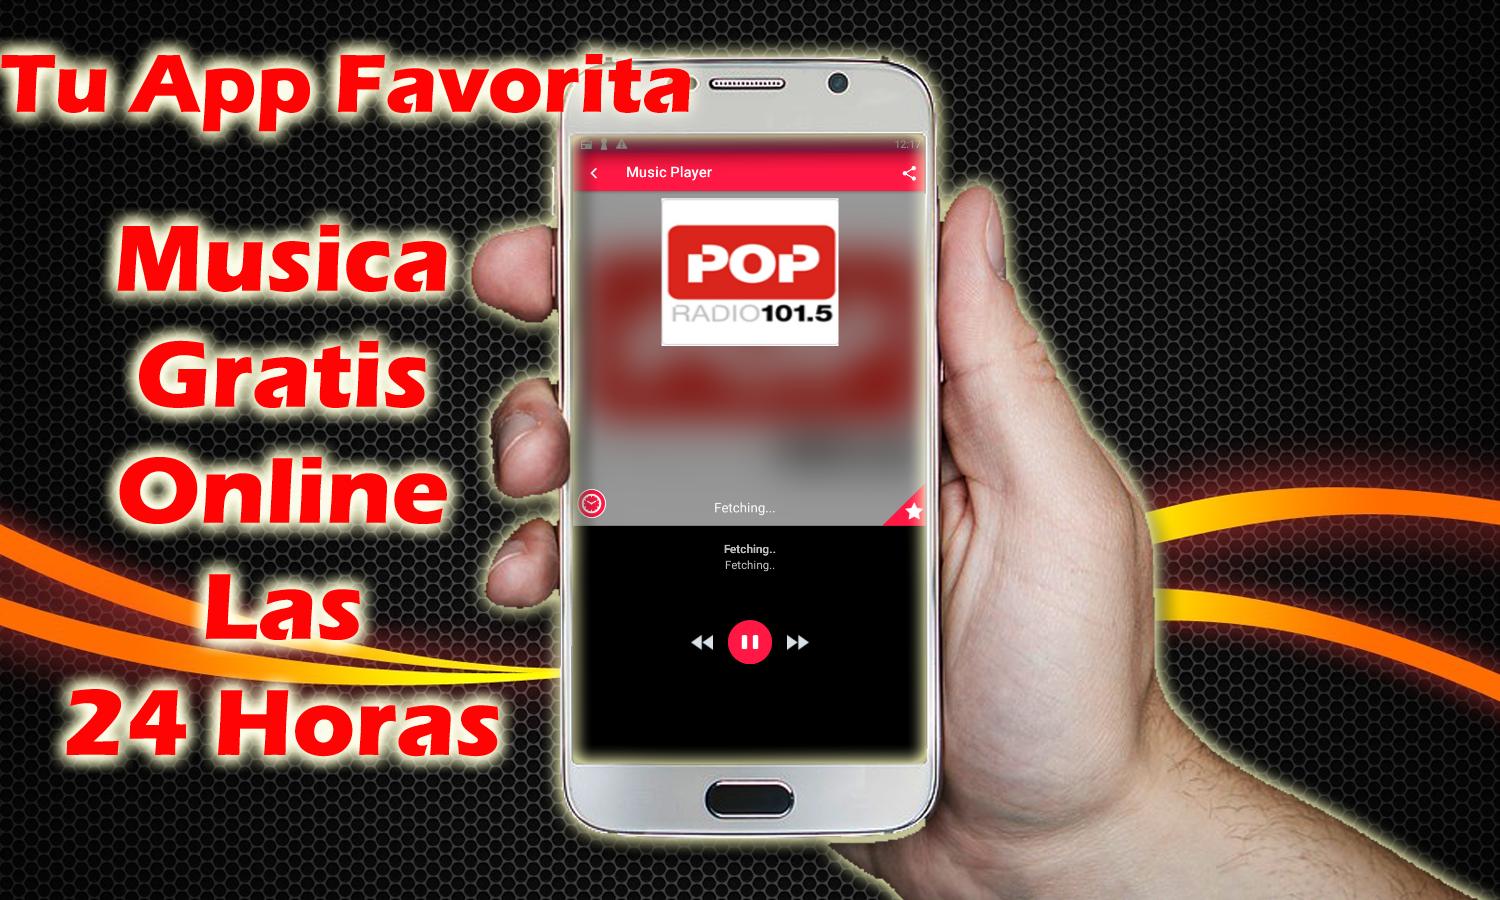 Pop Radio 101.5 Argentina 101.5 FM Radio Pop Radio APK voor Android Download